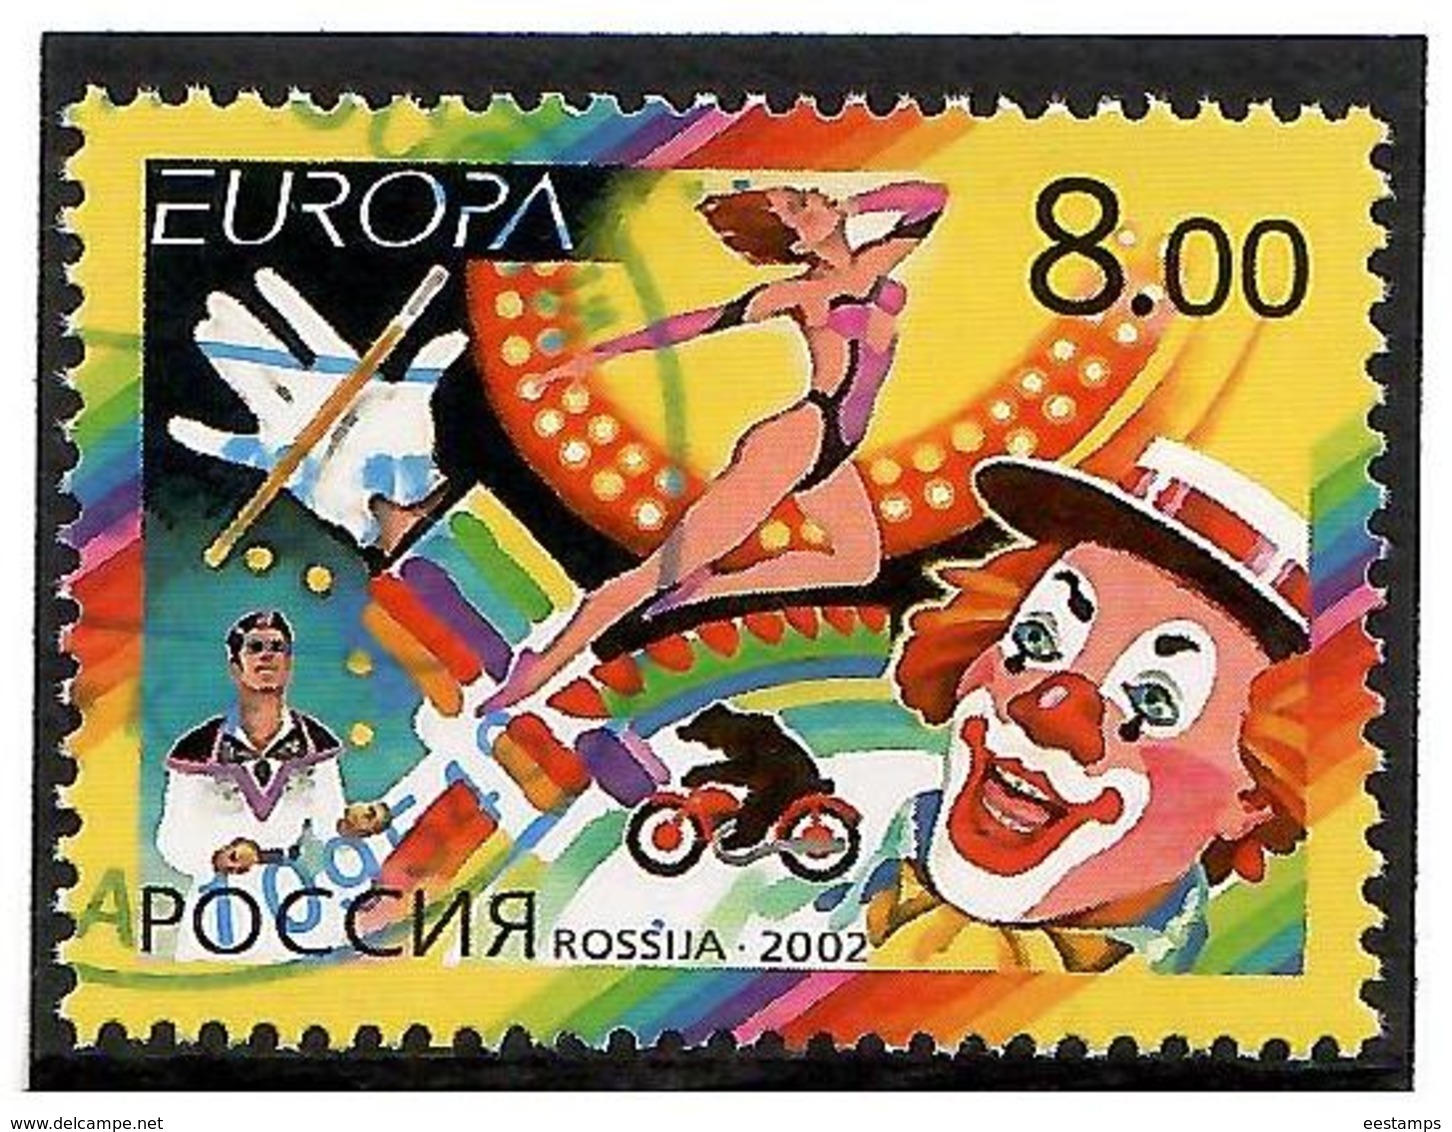 Russia.2002 EUROPA  (Circus). 1v: 8.00   Michel # 987  (oo) - Gebraucht